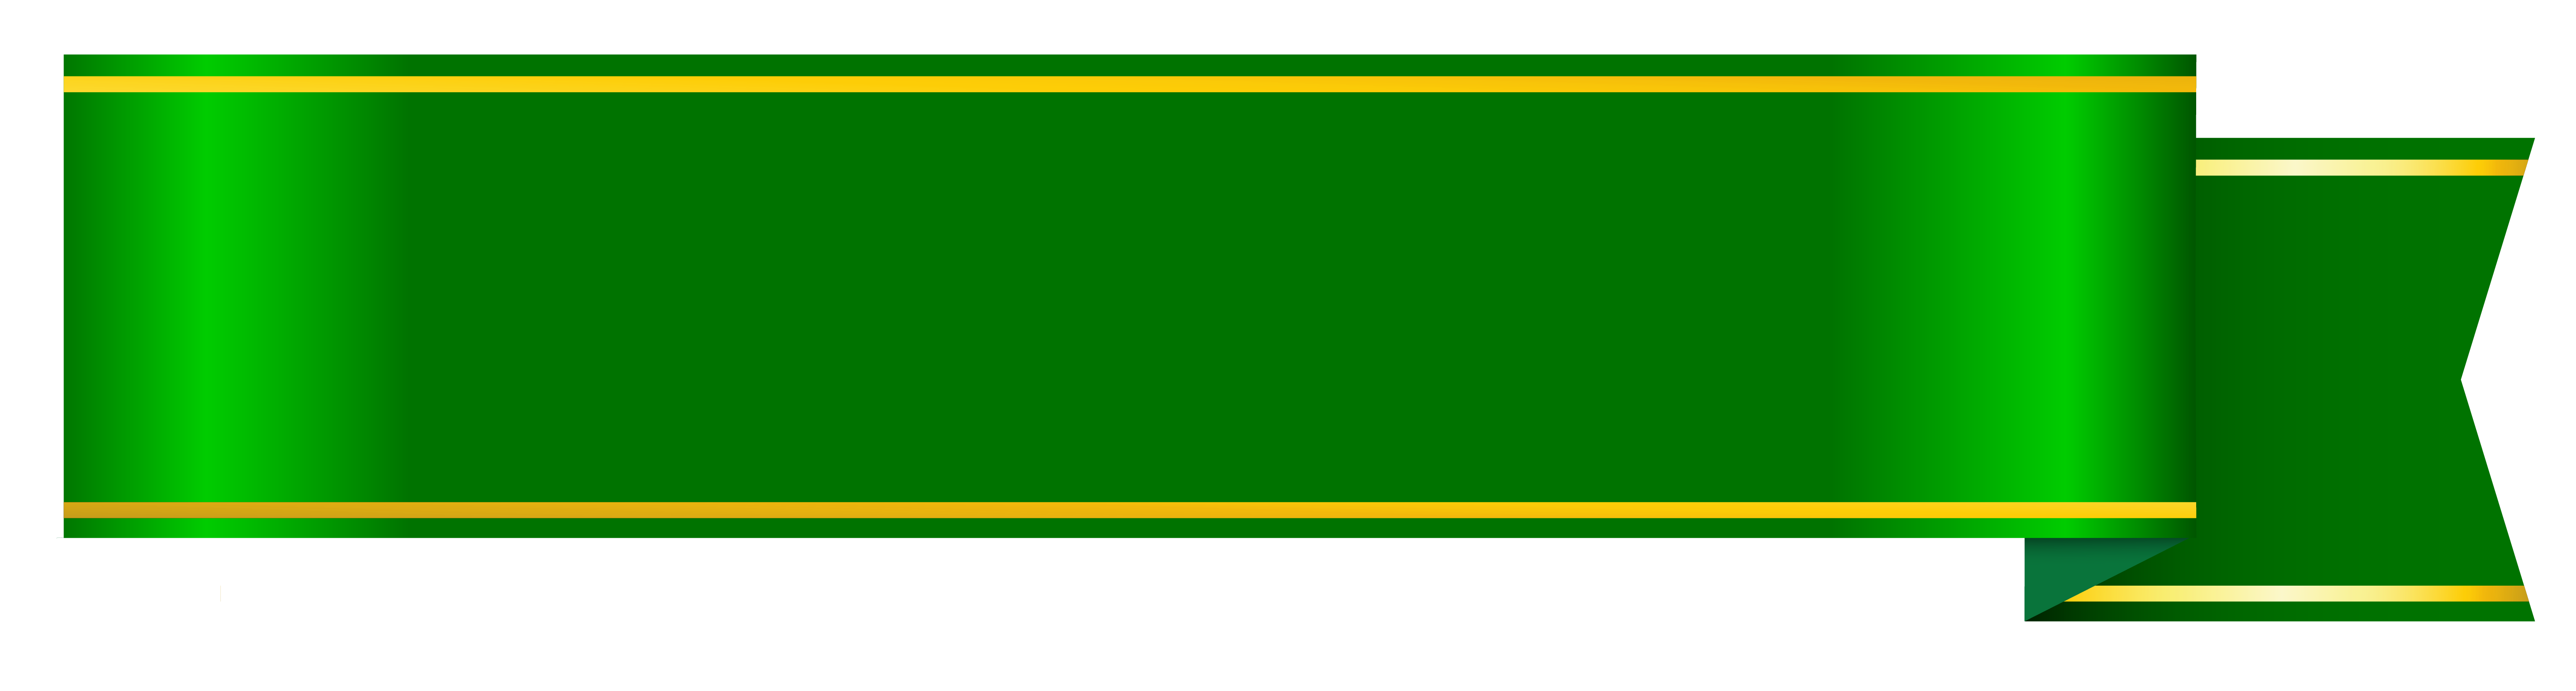 Groen lint PNG Pic